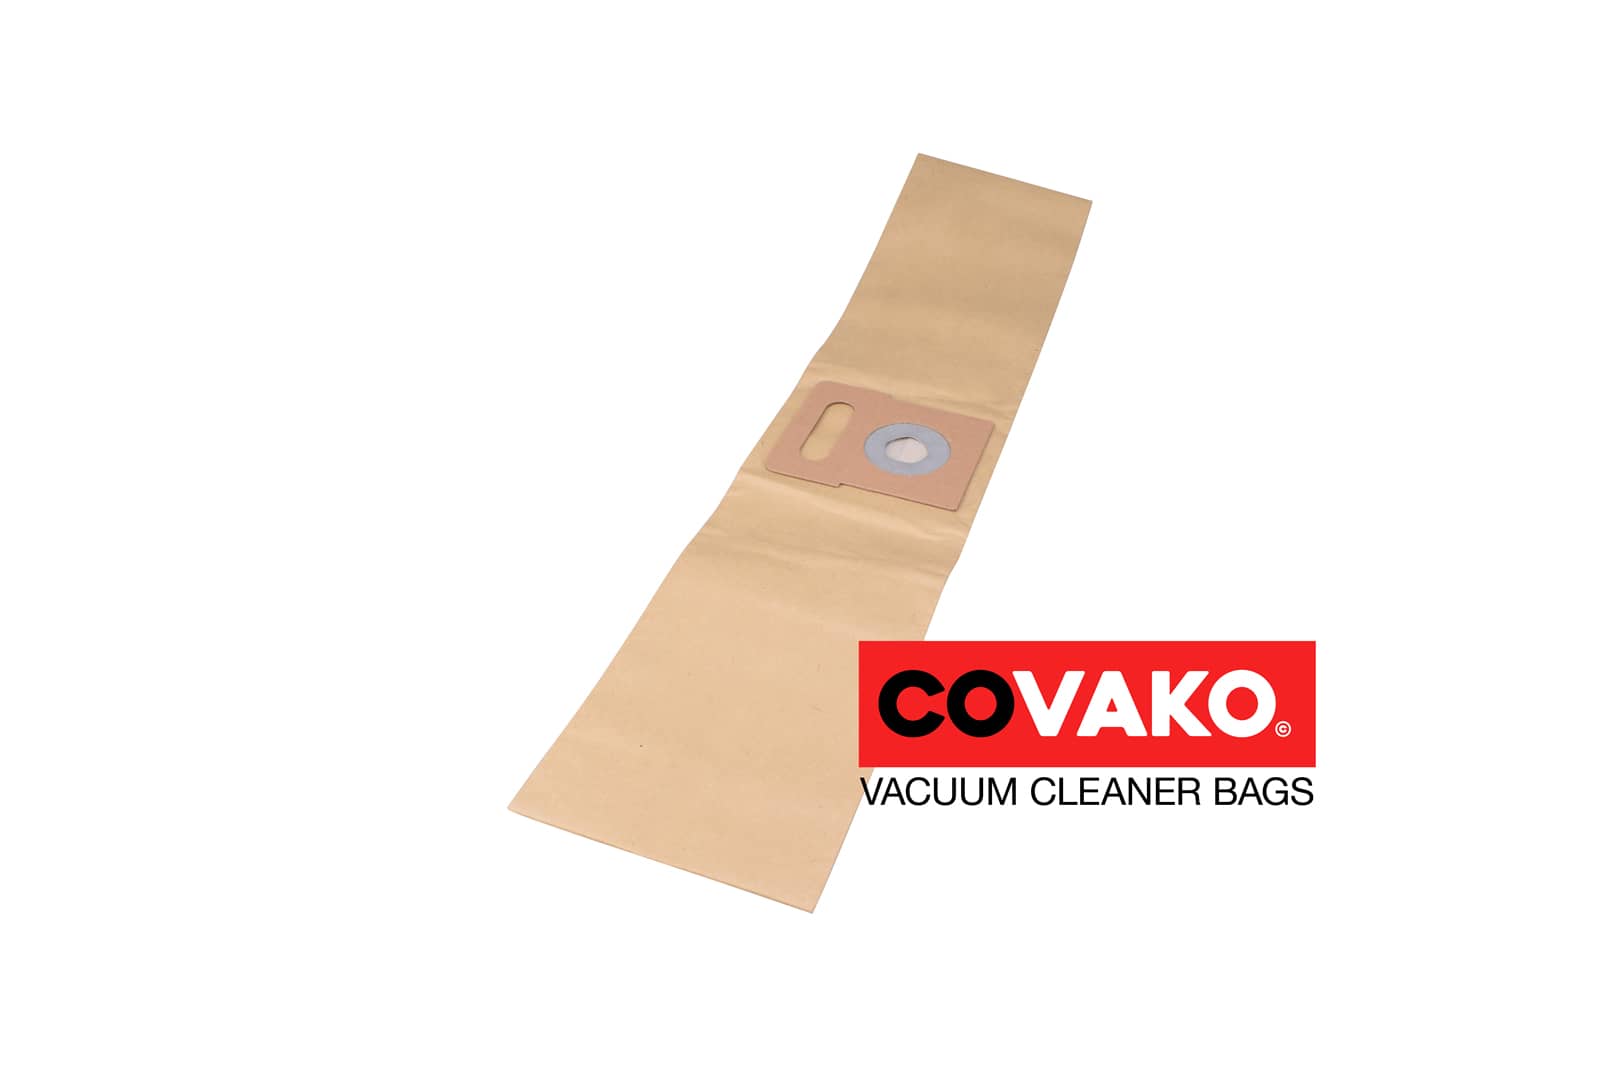 Fast 643533 / Paper - Fast vacuum cleaner bags